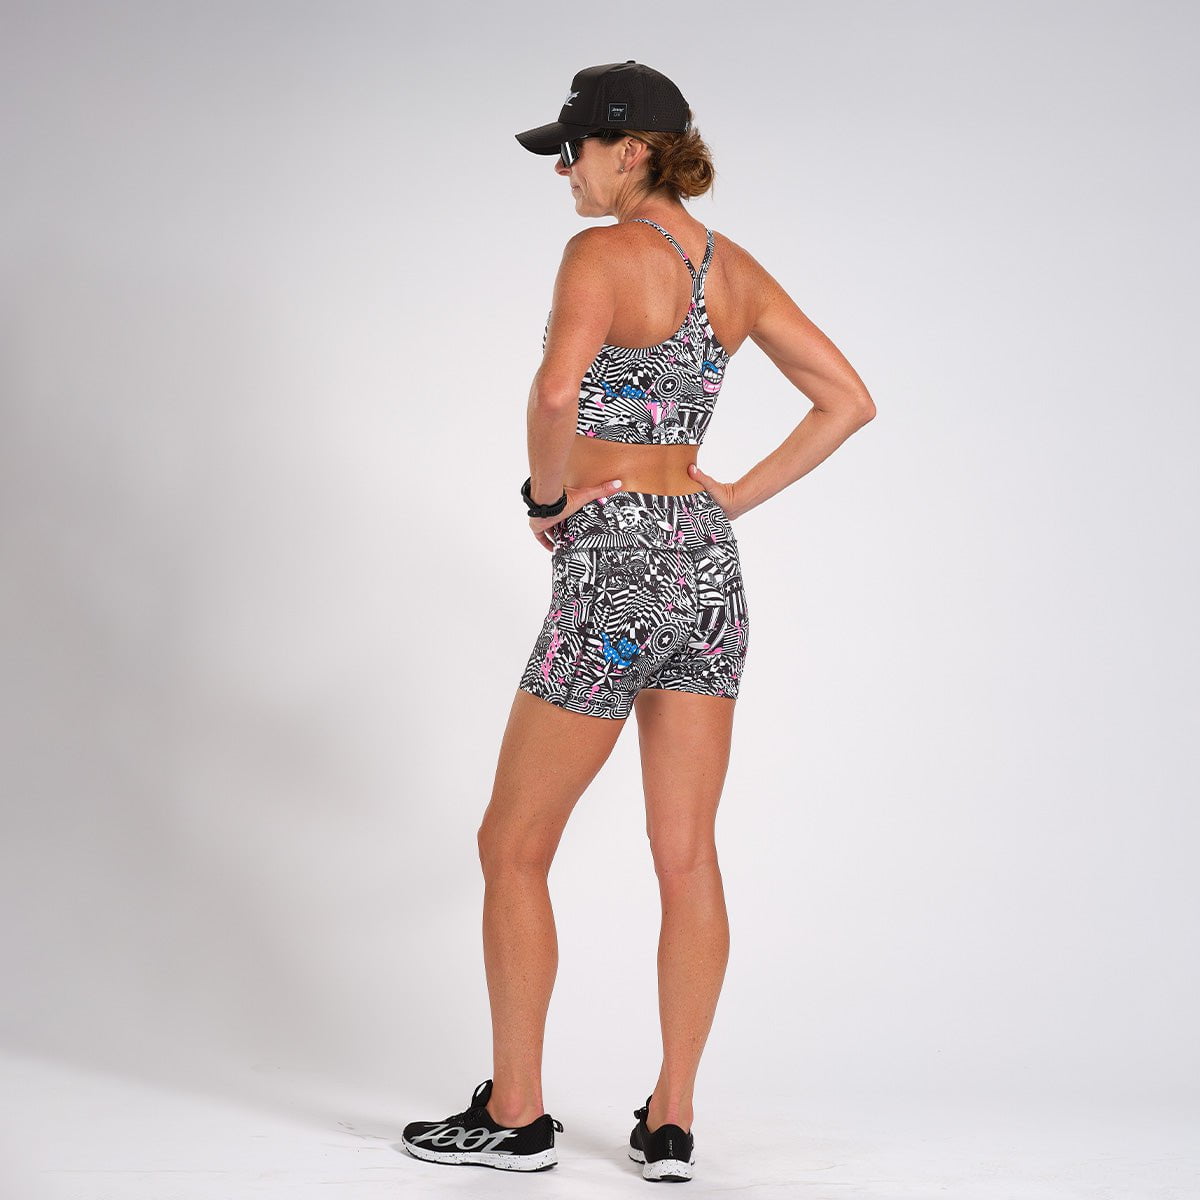 Zoot Sports Run Tops Womens LTD Run Crop - American Rebel